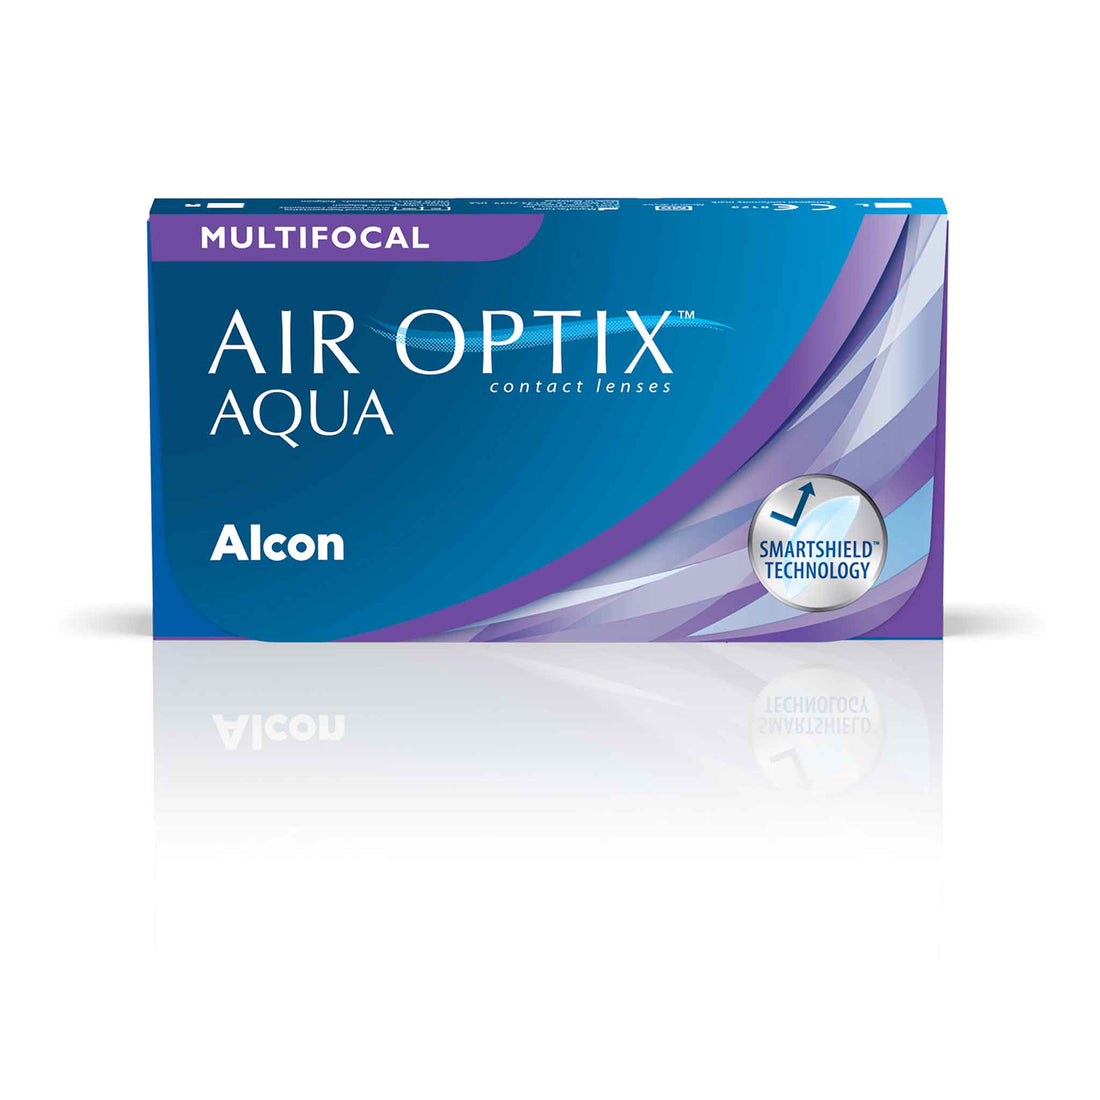 AIR OPTIX® AQUA Multifocal Contact Lenses - 6 pack - Nation's Vision